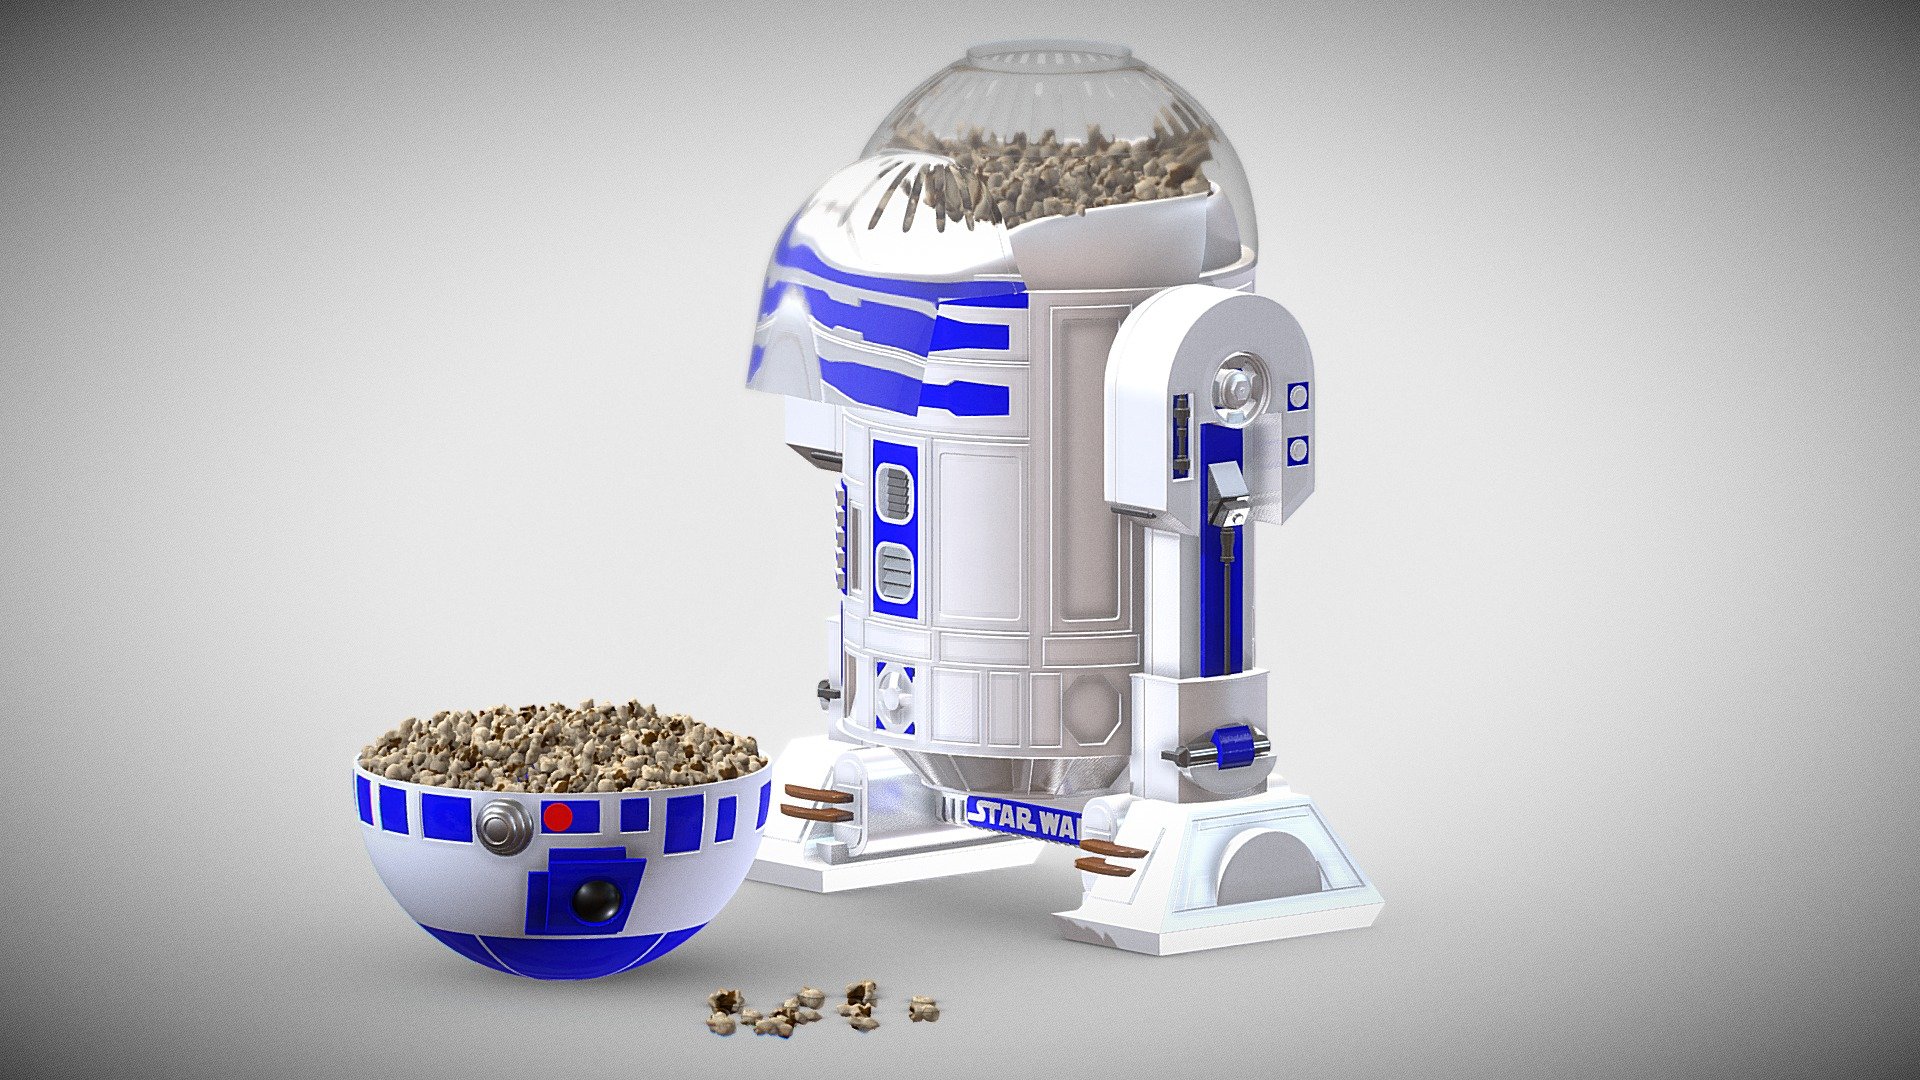 Star Wars R2D2 Popcorn Maker by Williams Sonoma 3D Model in